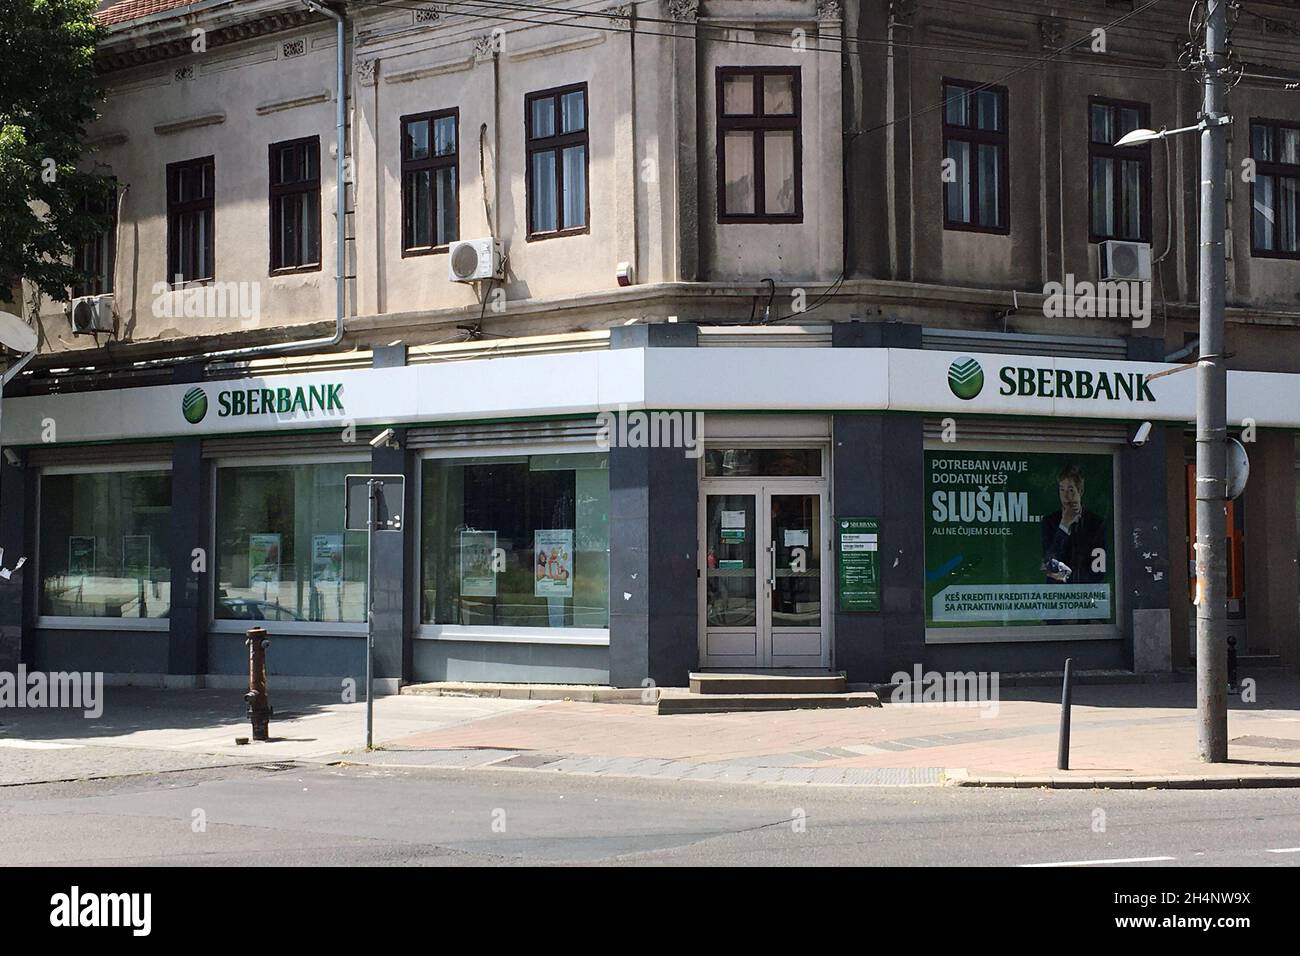 Serbia, Belgrad - July 24, 2021: Sberbank branch in Belgrad will be sold to AIK Banka Stock Photo